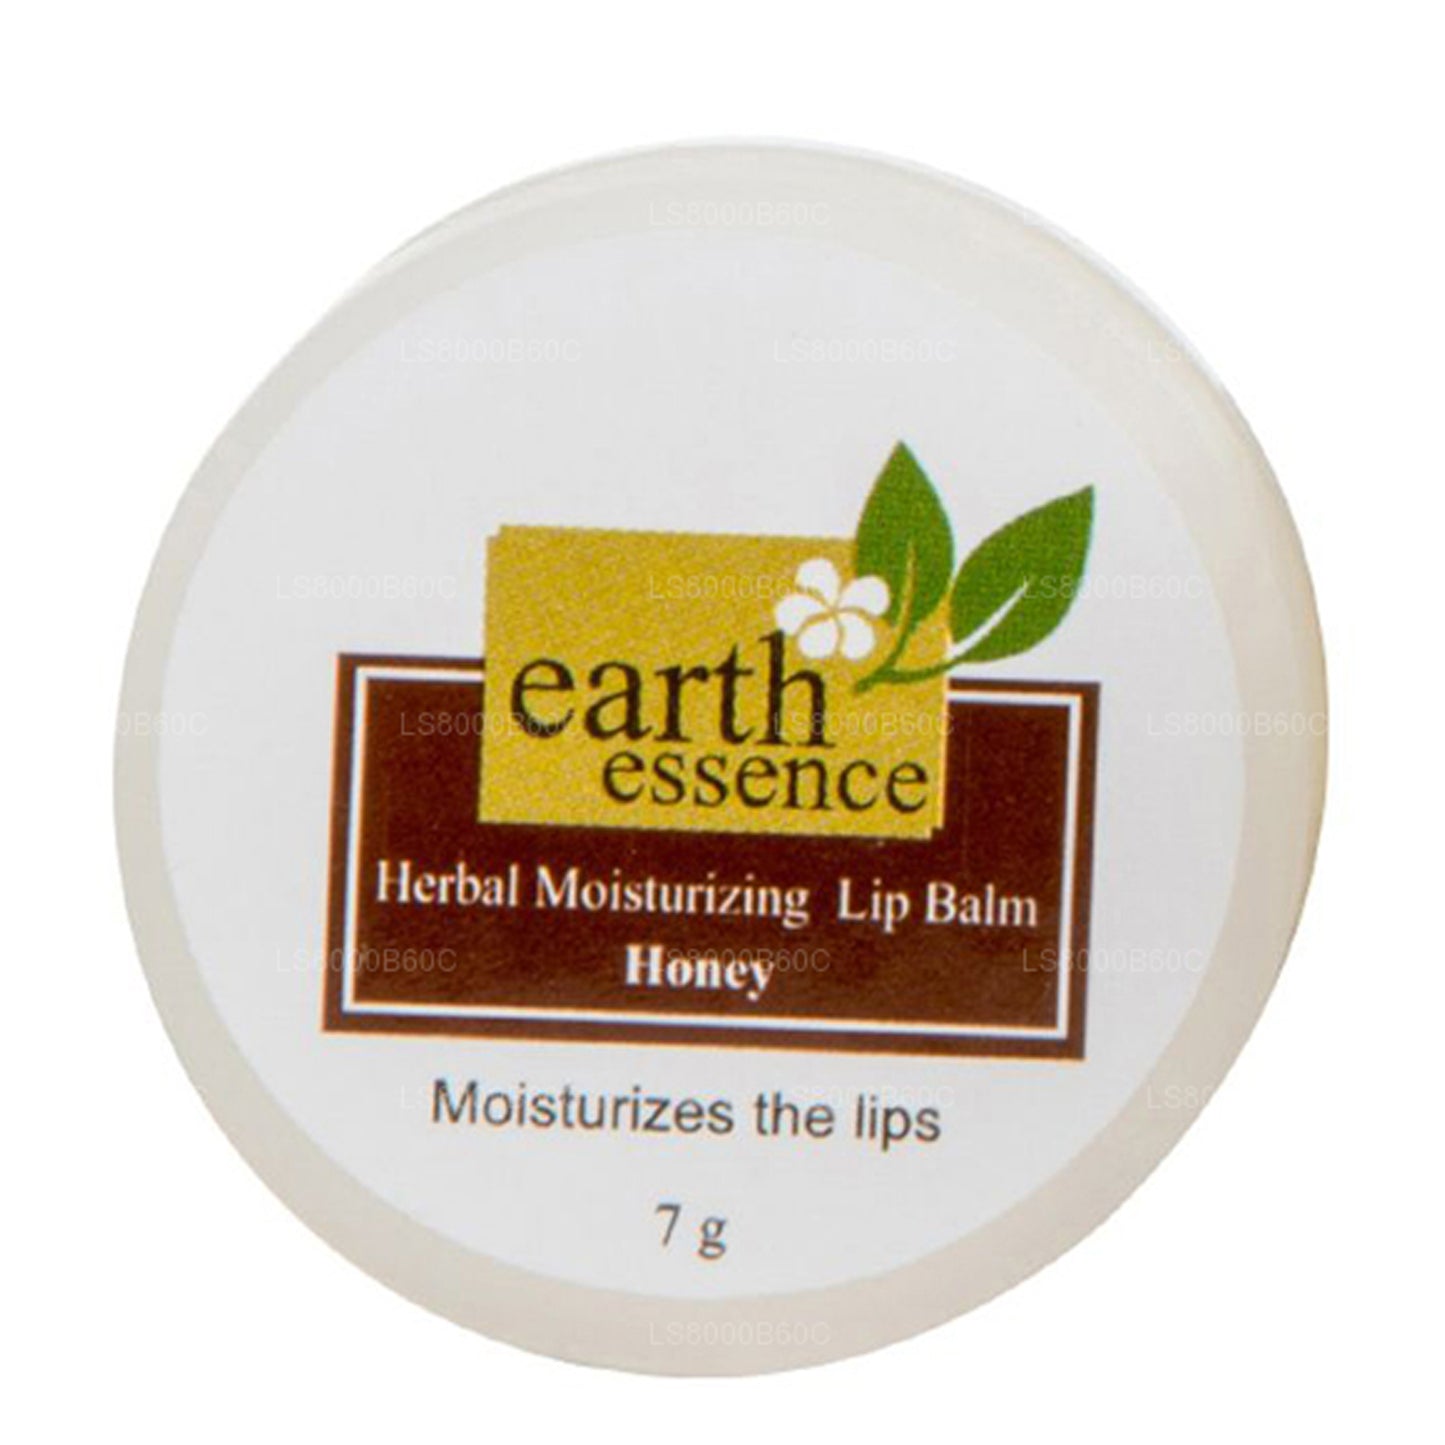 Earth Essence Herbal Moisturizing Lip Balm (7g)